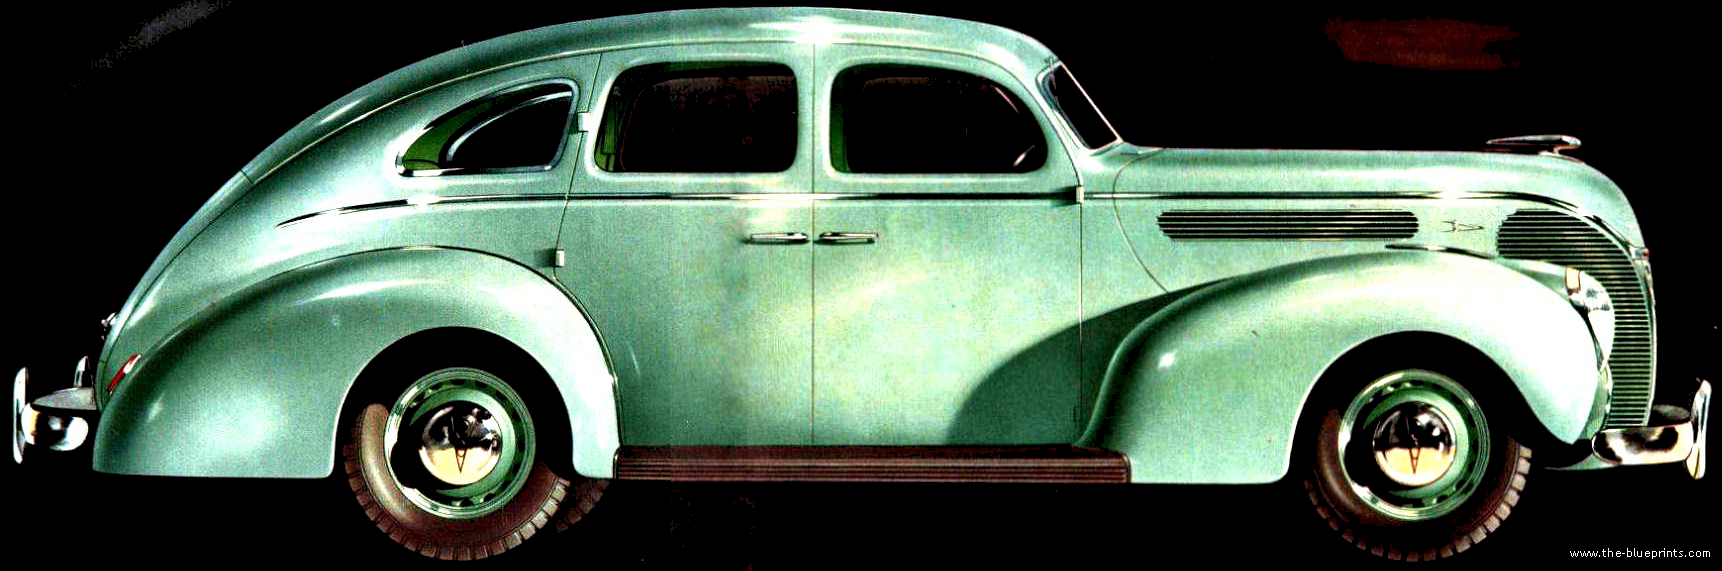 1938 Ford blueprint